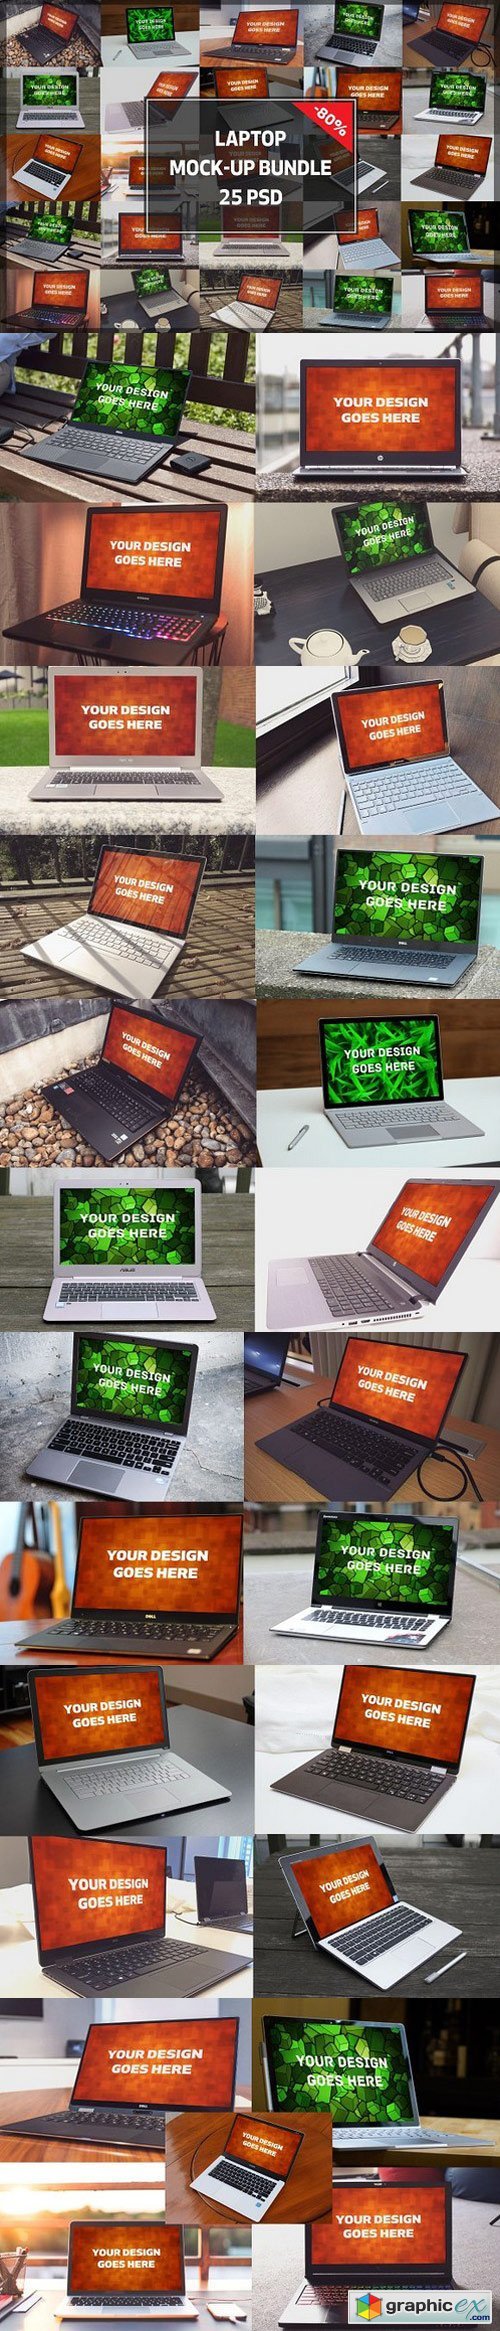 BUNDLE! 25 Windows Laptop Mock-up